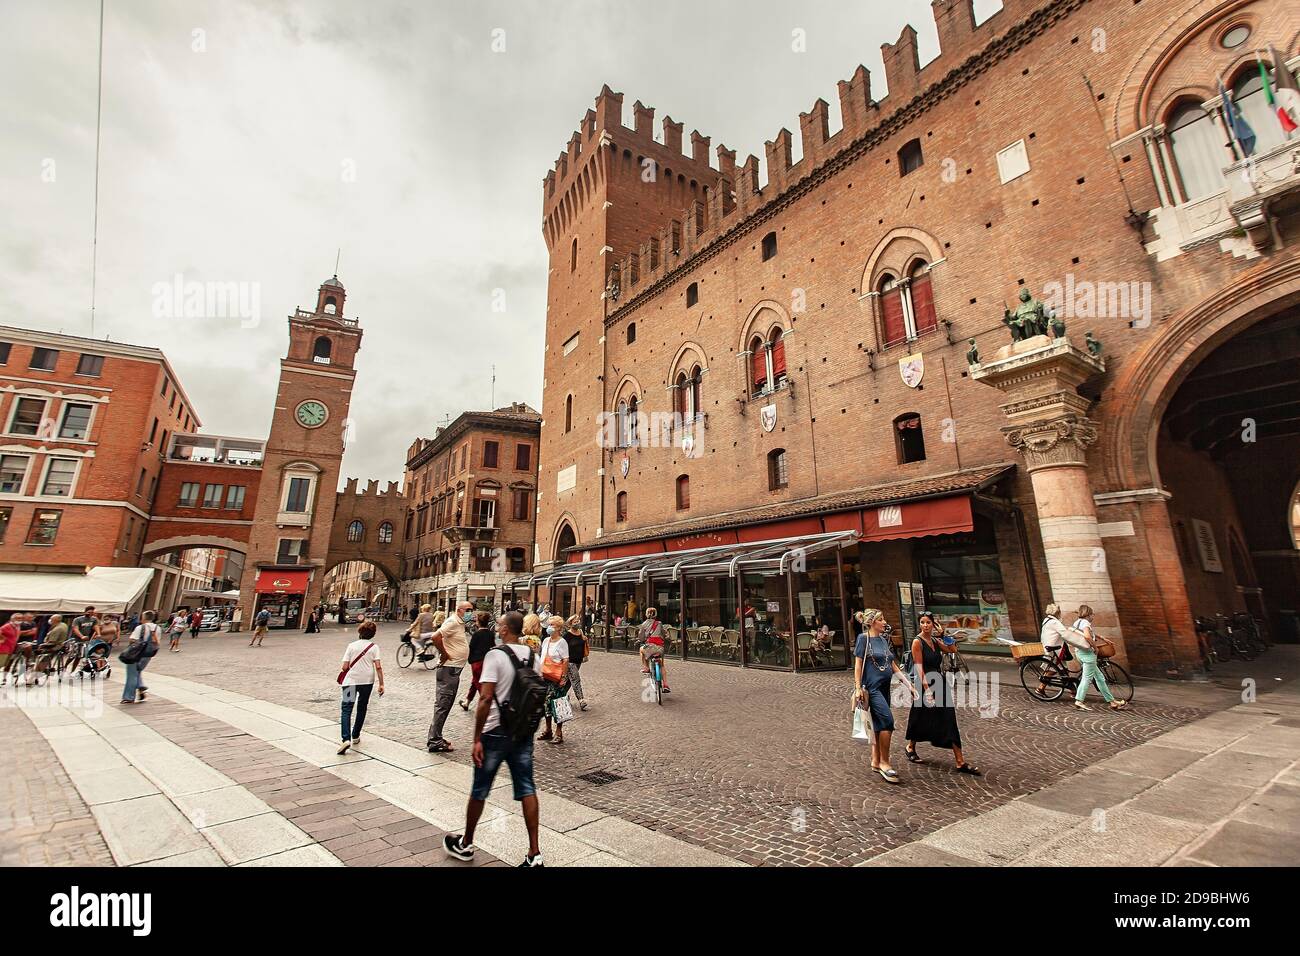 FERRARA, ITALY 29 JULY 2020 : Piazza del municipio in Ferrara in Italy a famous square in the city full of people Stock Photo